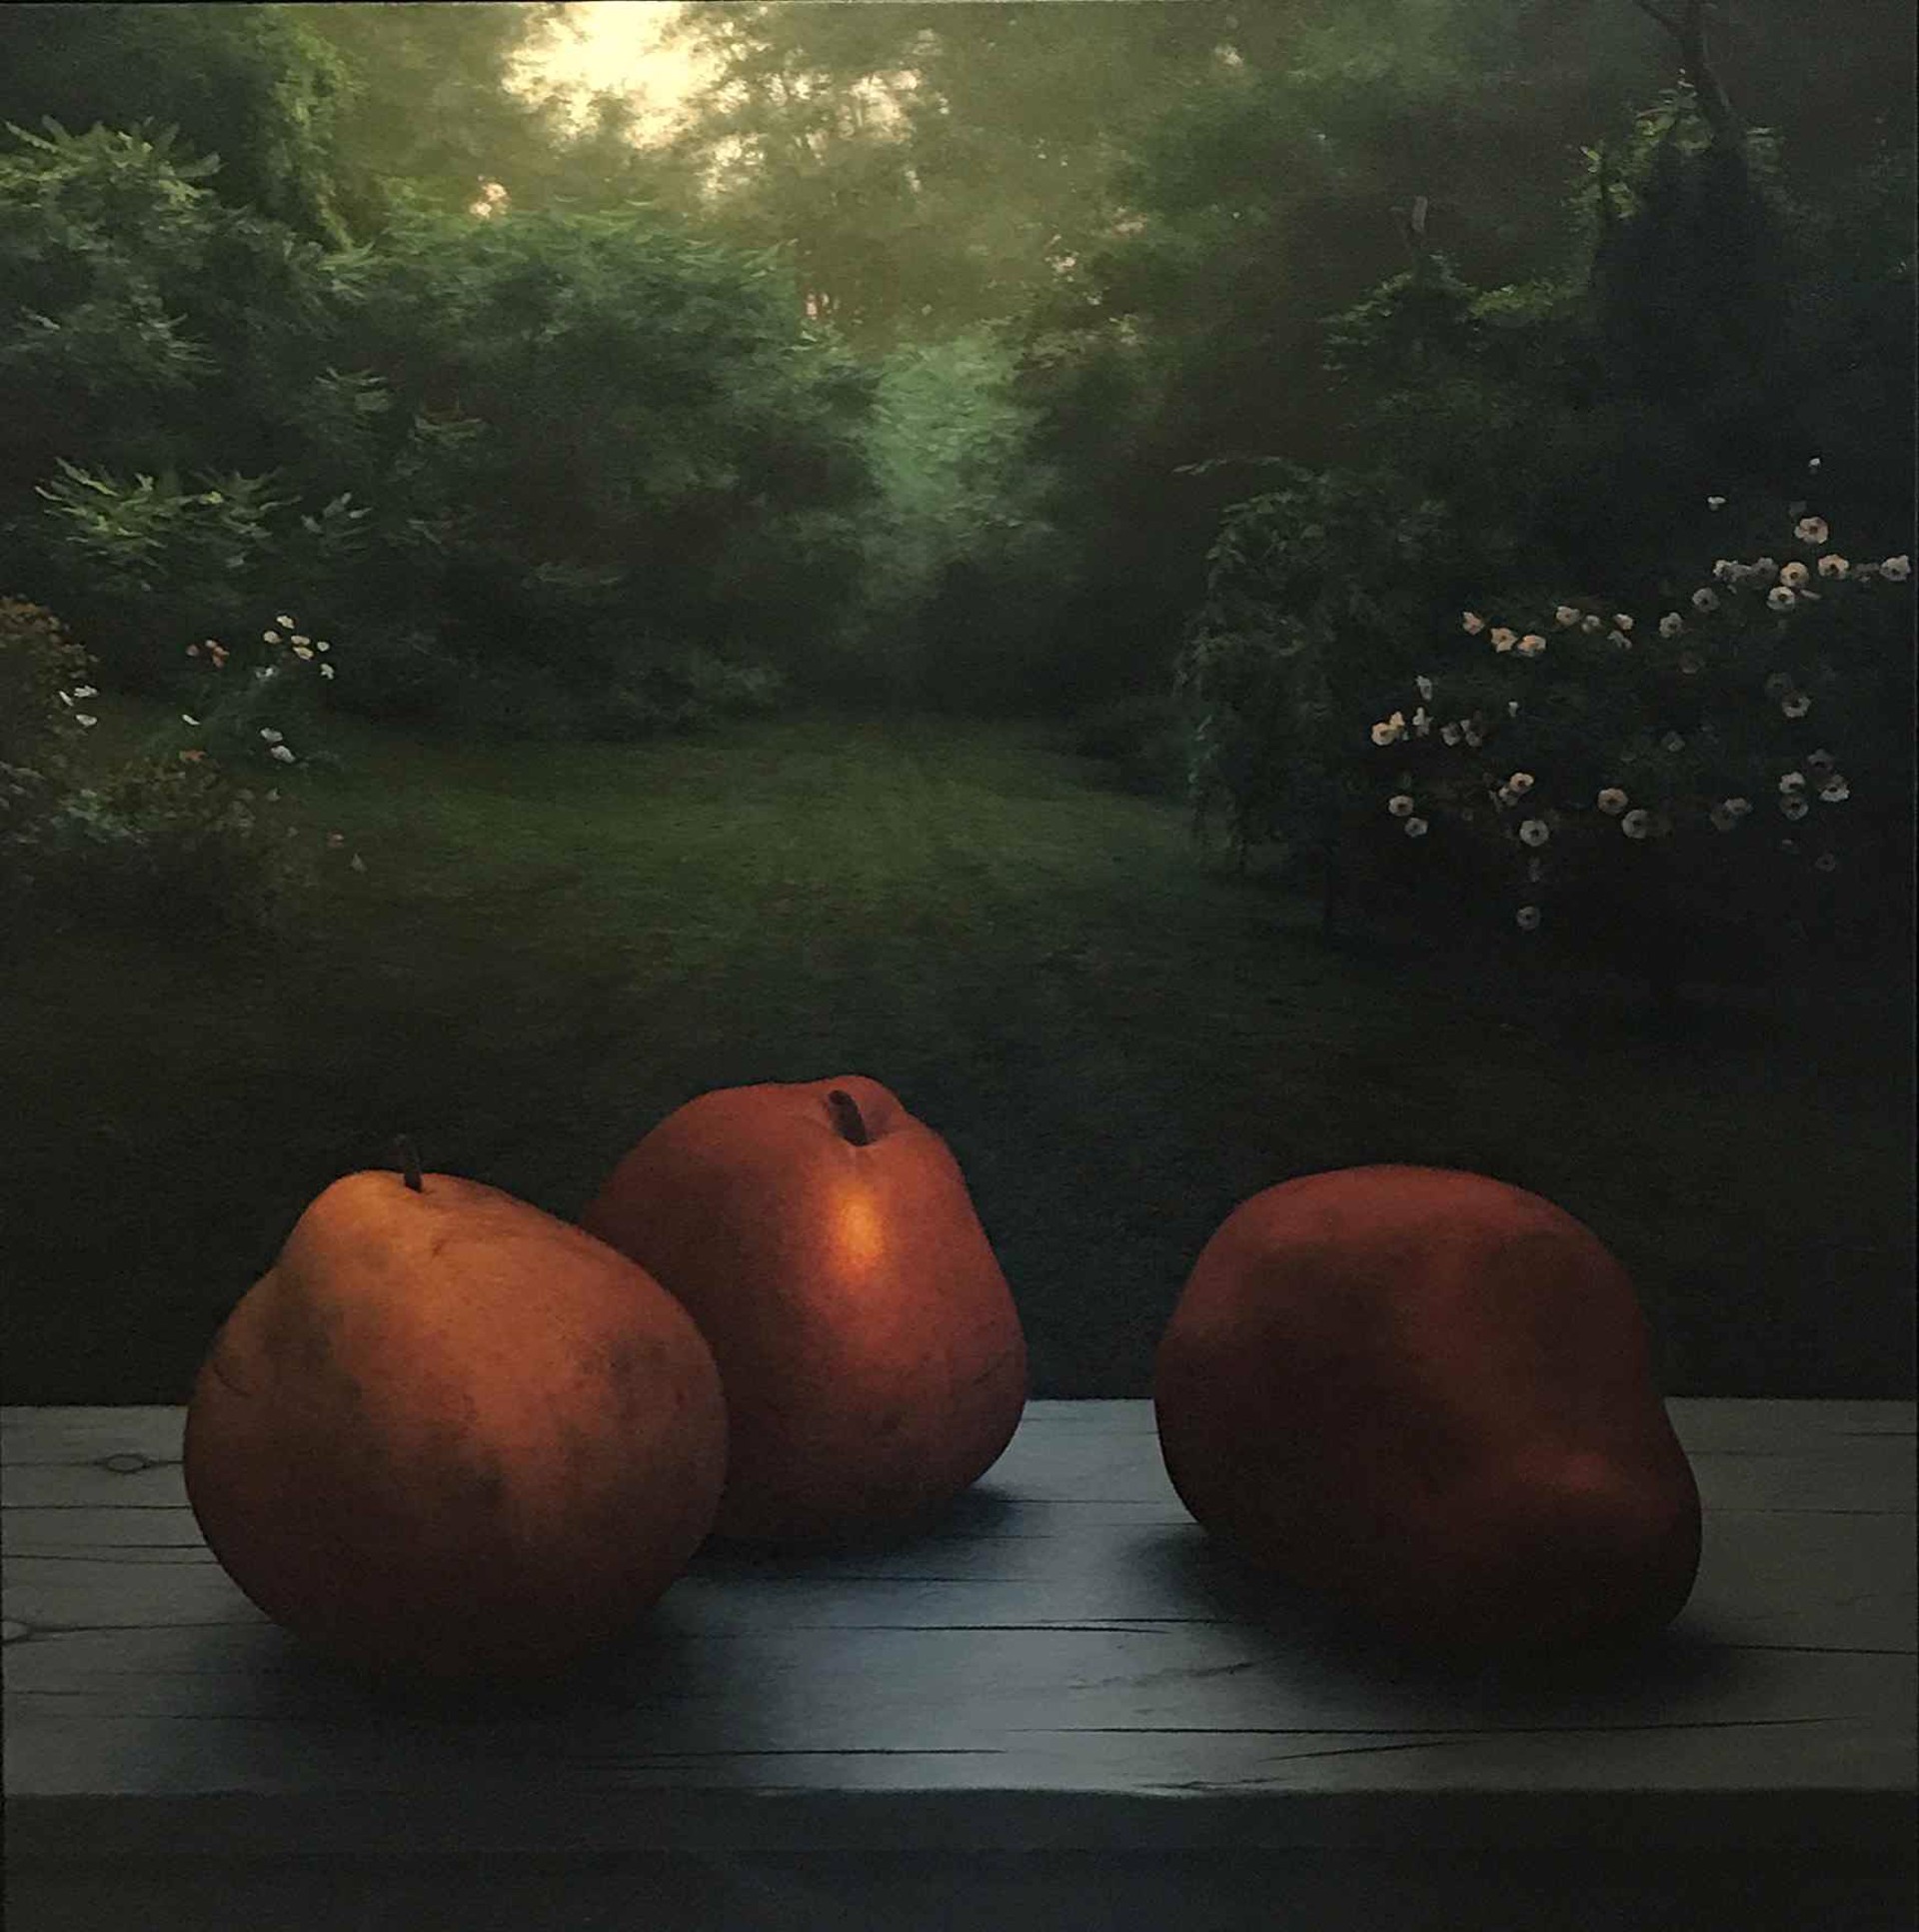 Three Pears by Scott Prior